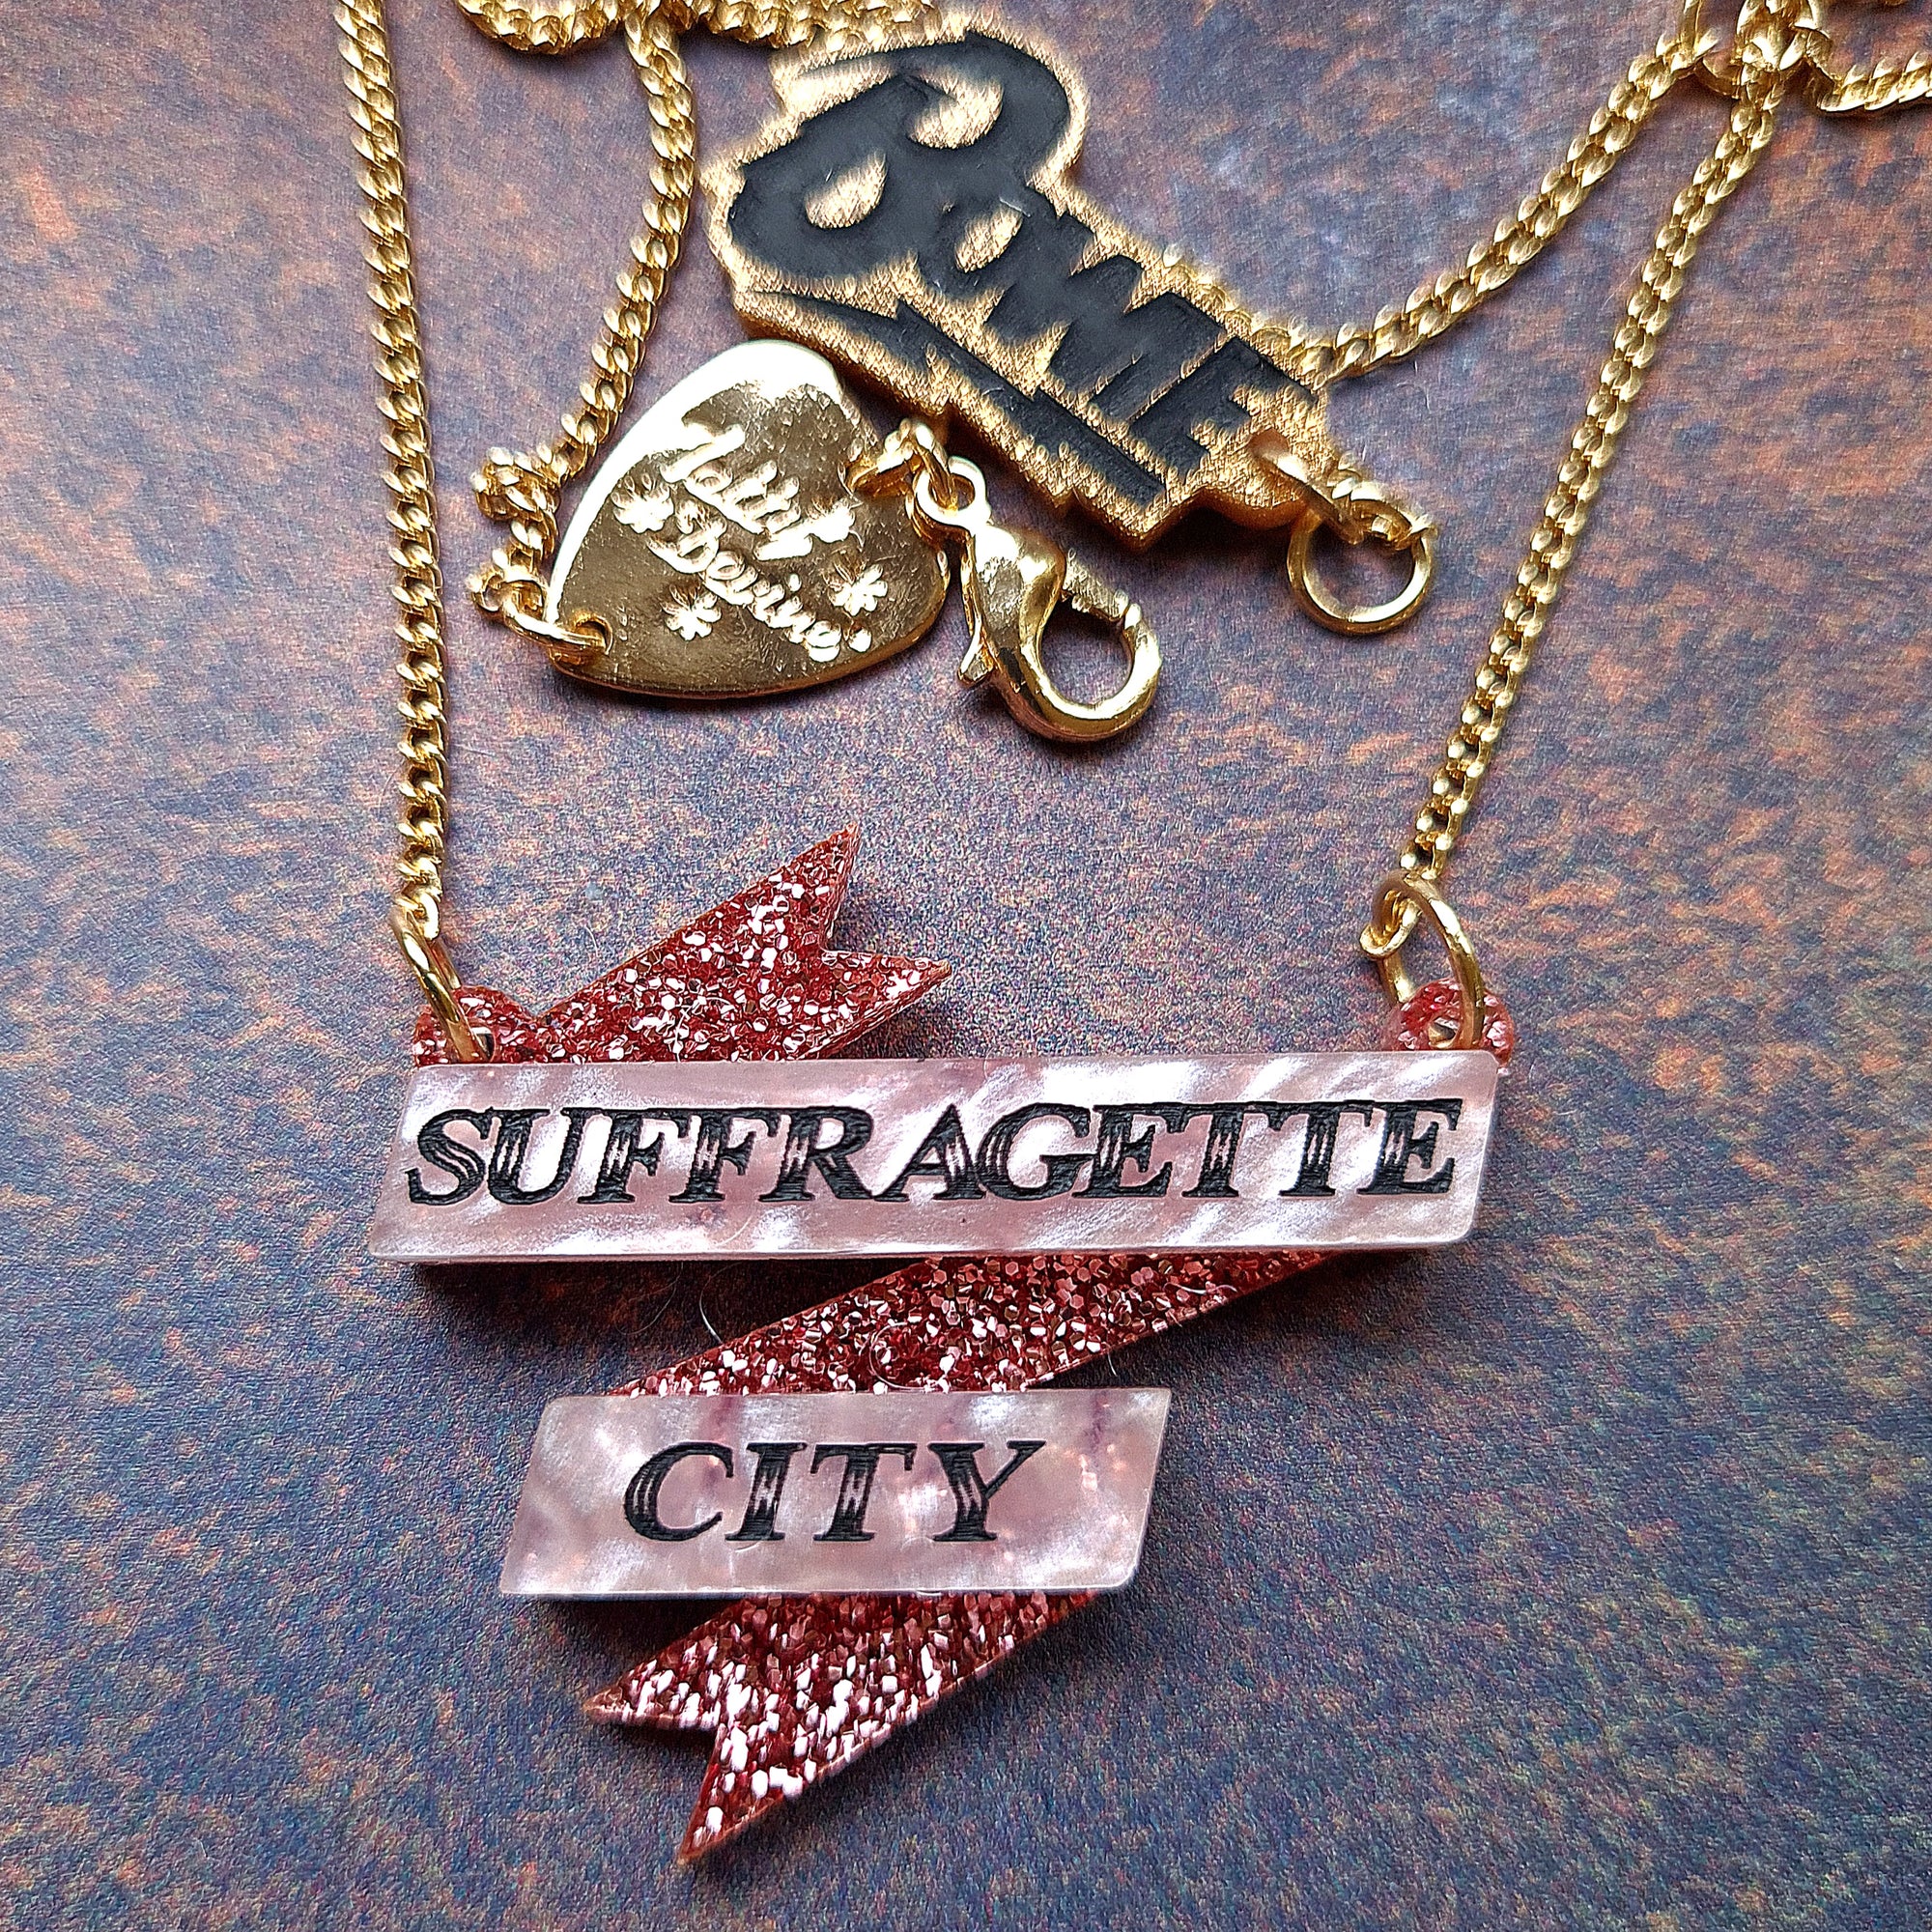 Suffragette City Necklace by Tatty Devine